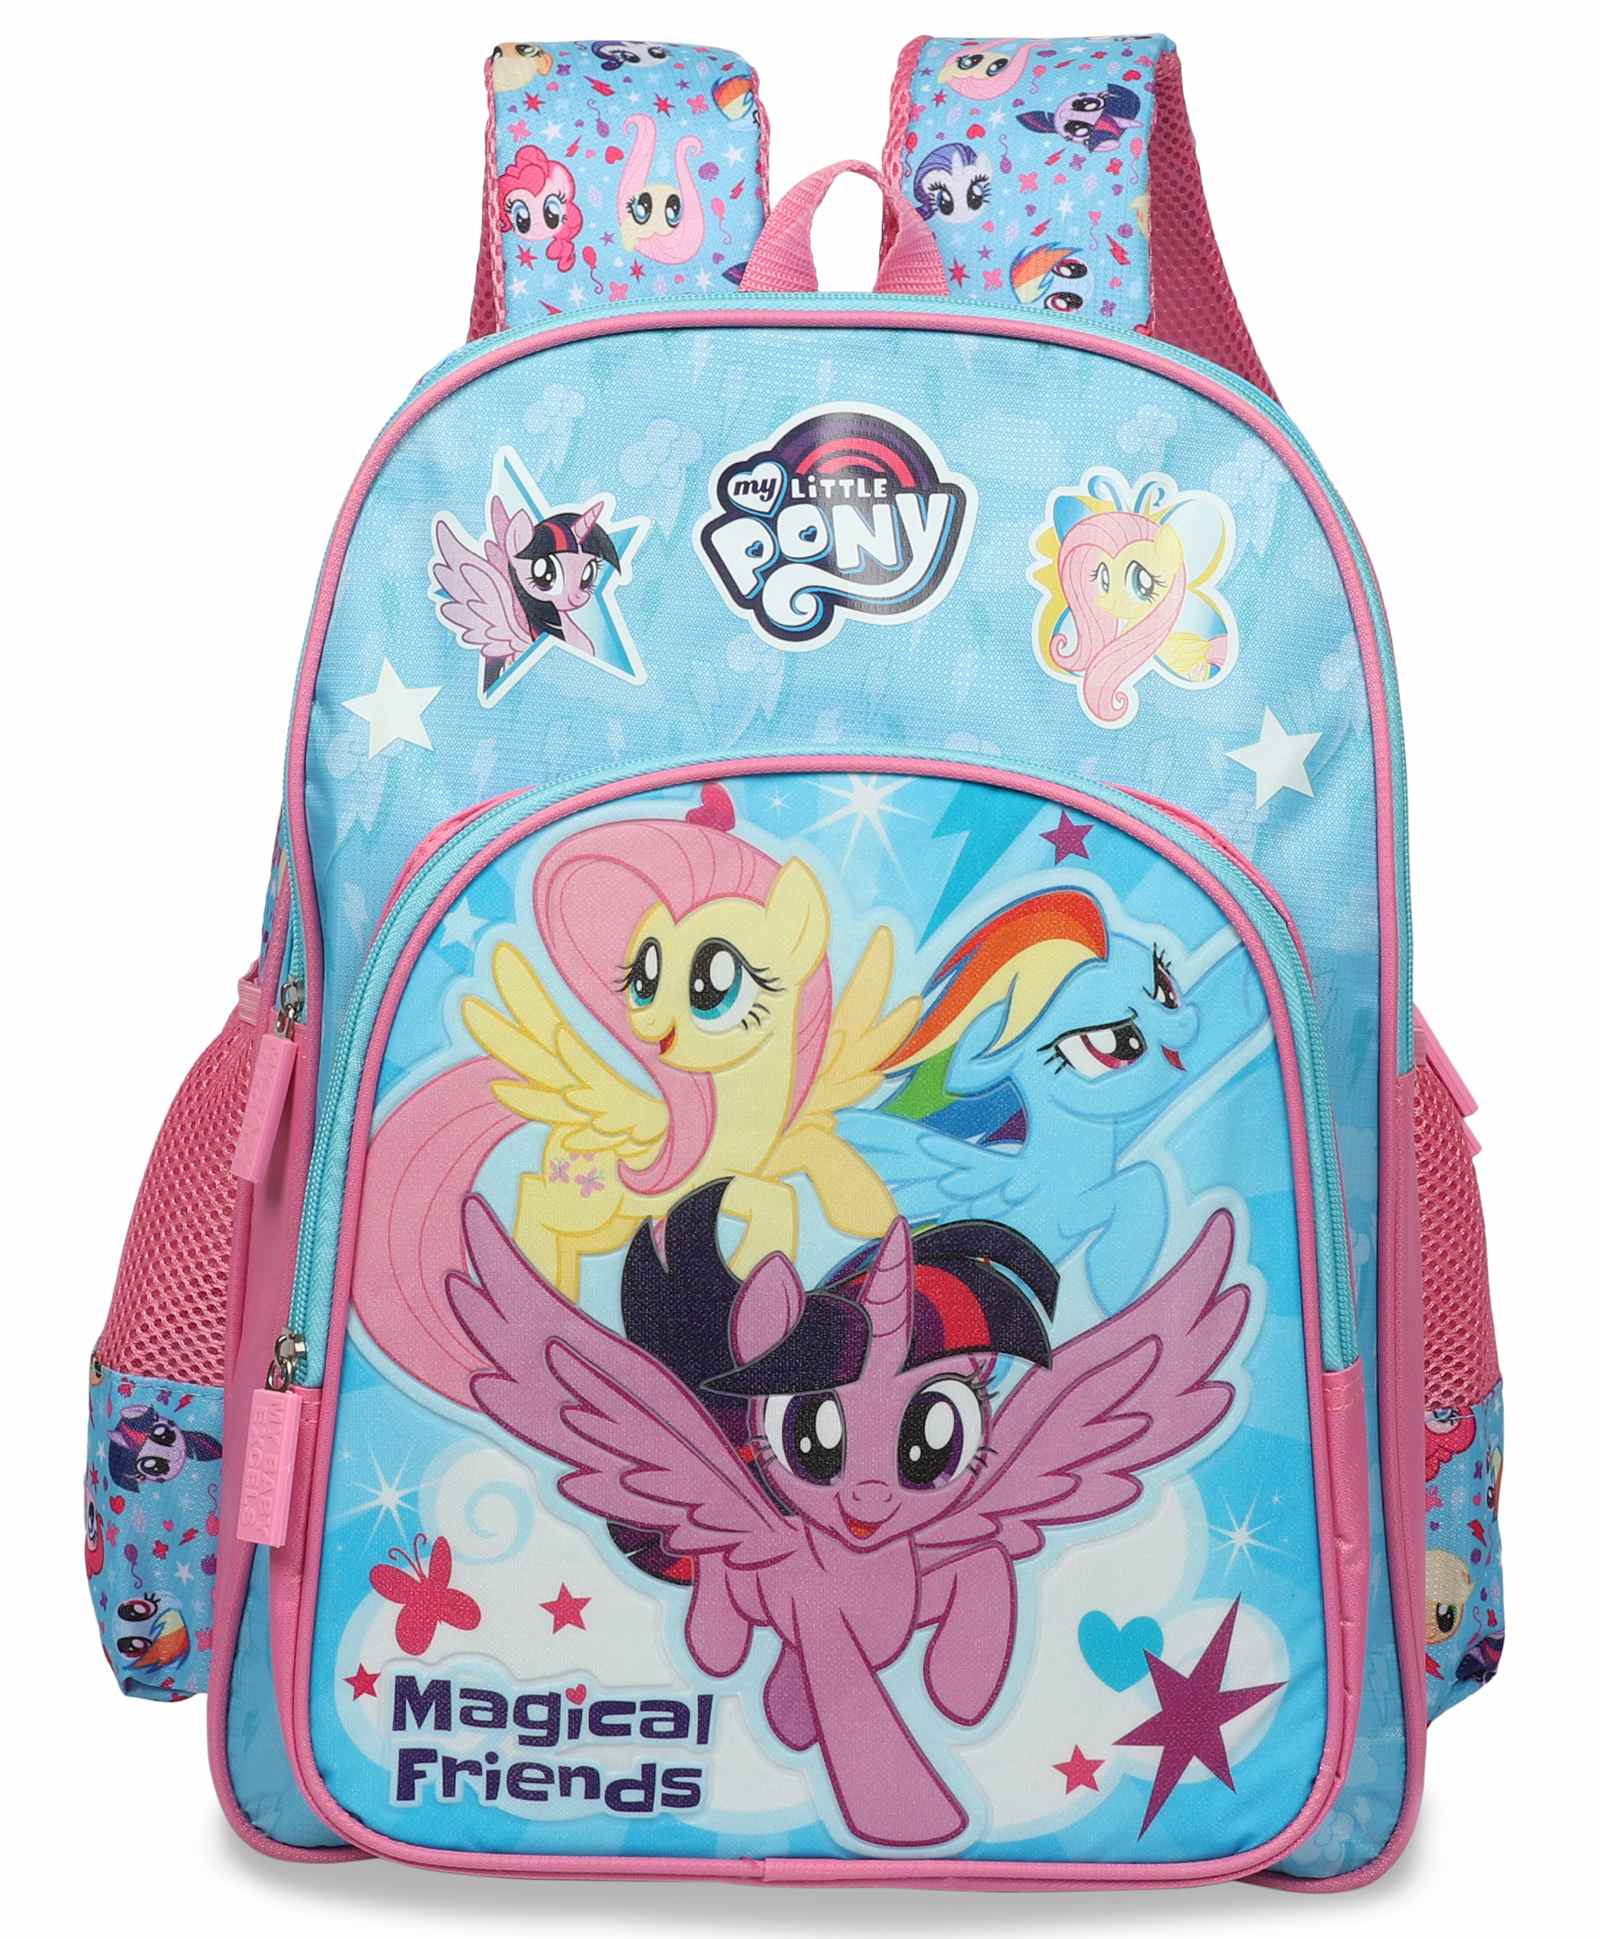 منظف فهد المعلمات  My Little Pony School Bag Blue - 14 Inches Online in India, Buy at Best  Price from FirstCry.com - 3364434